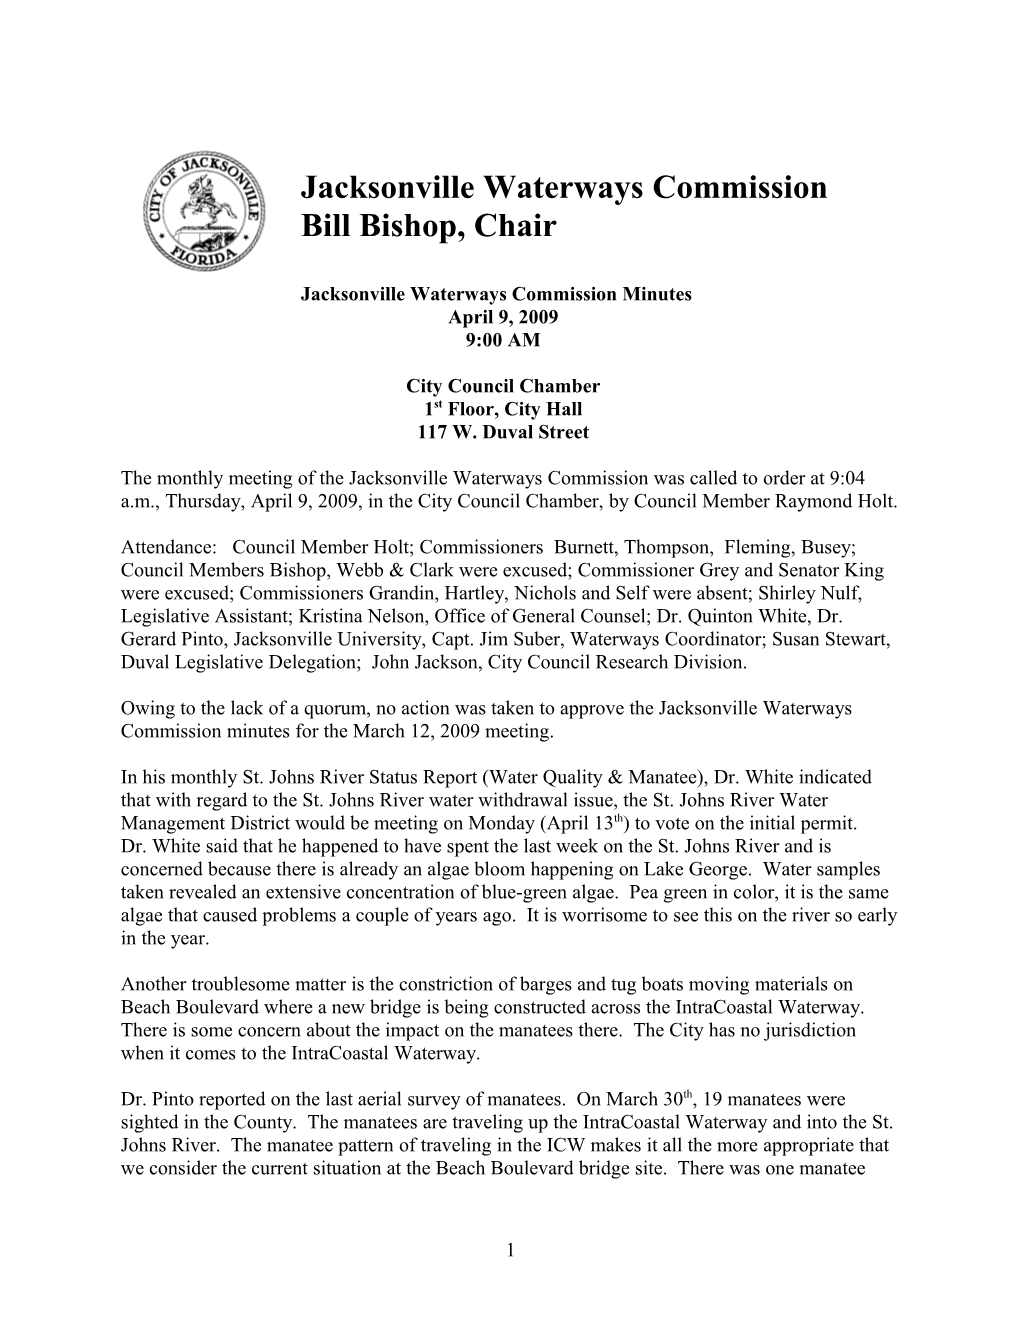 Jacksonville Waterways Commission Minutes